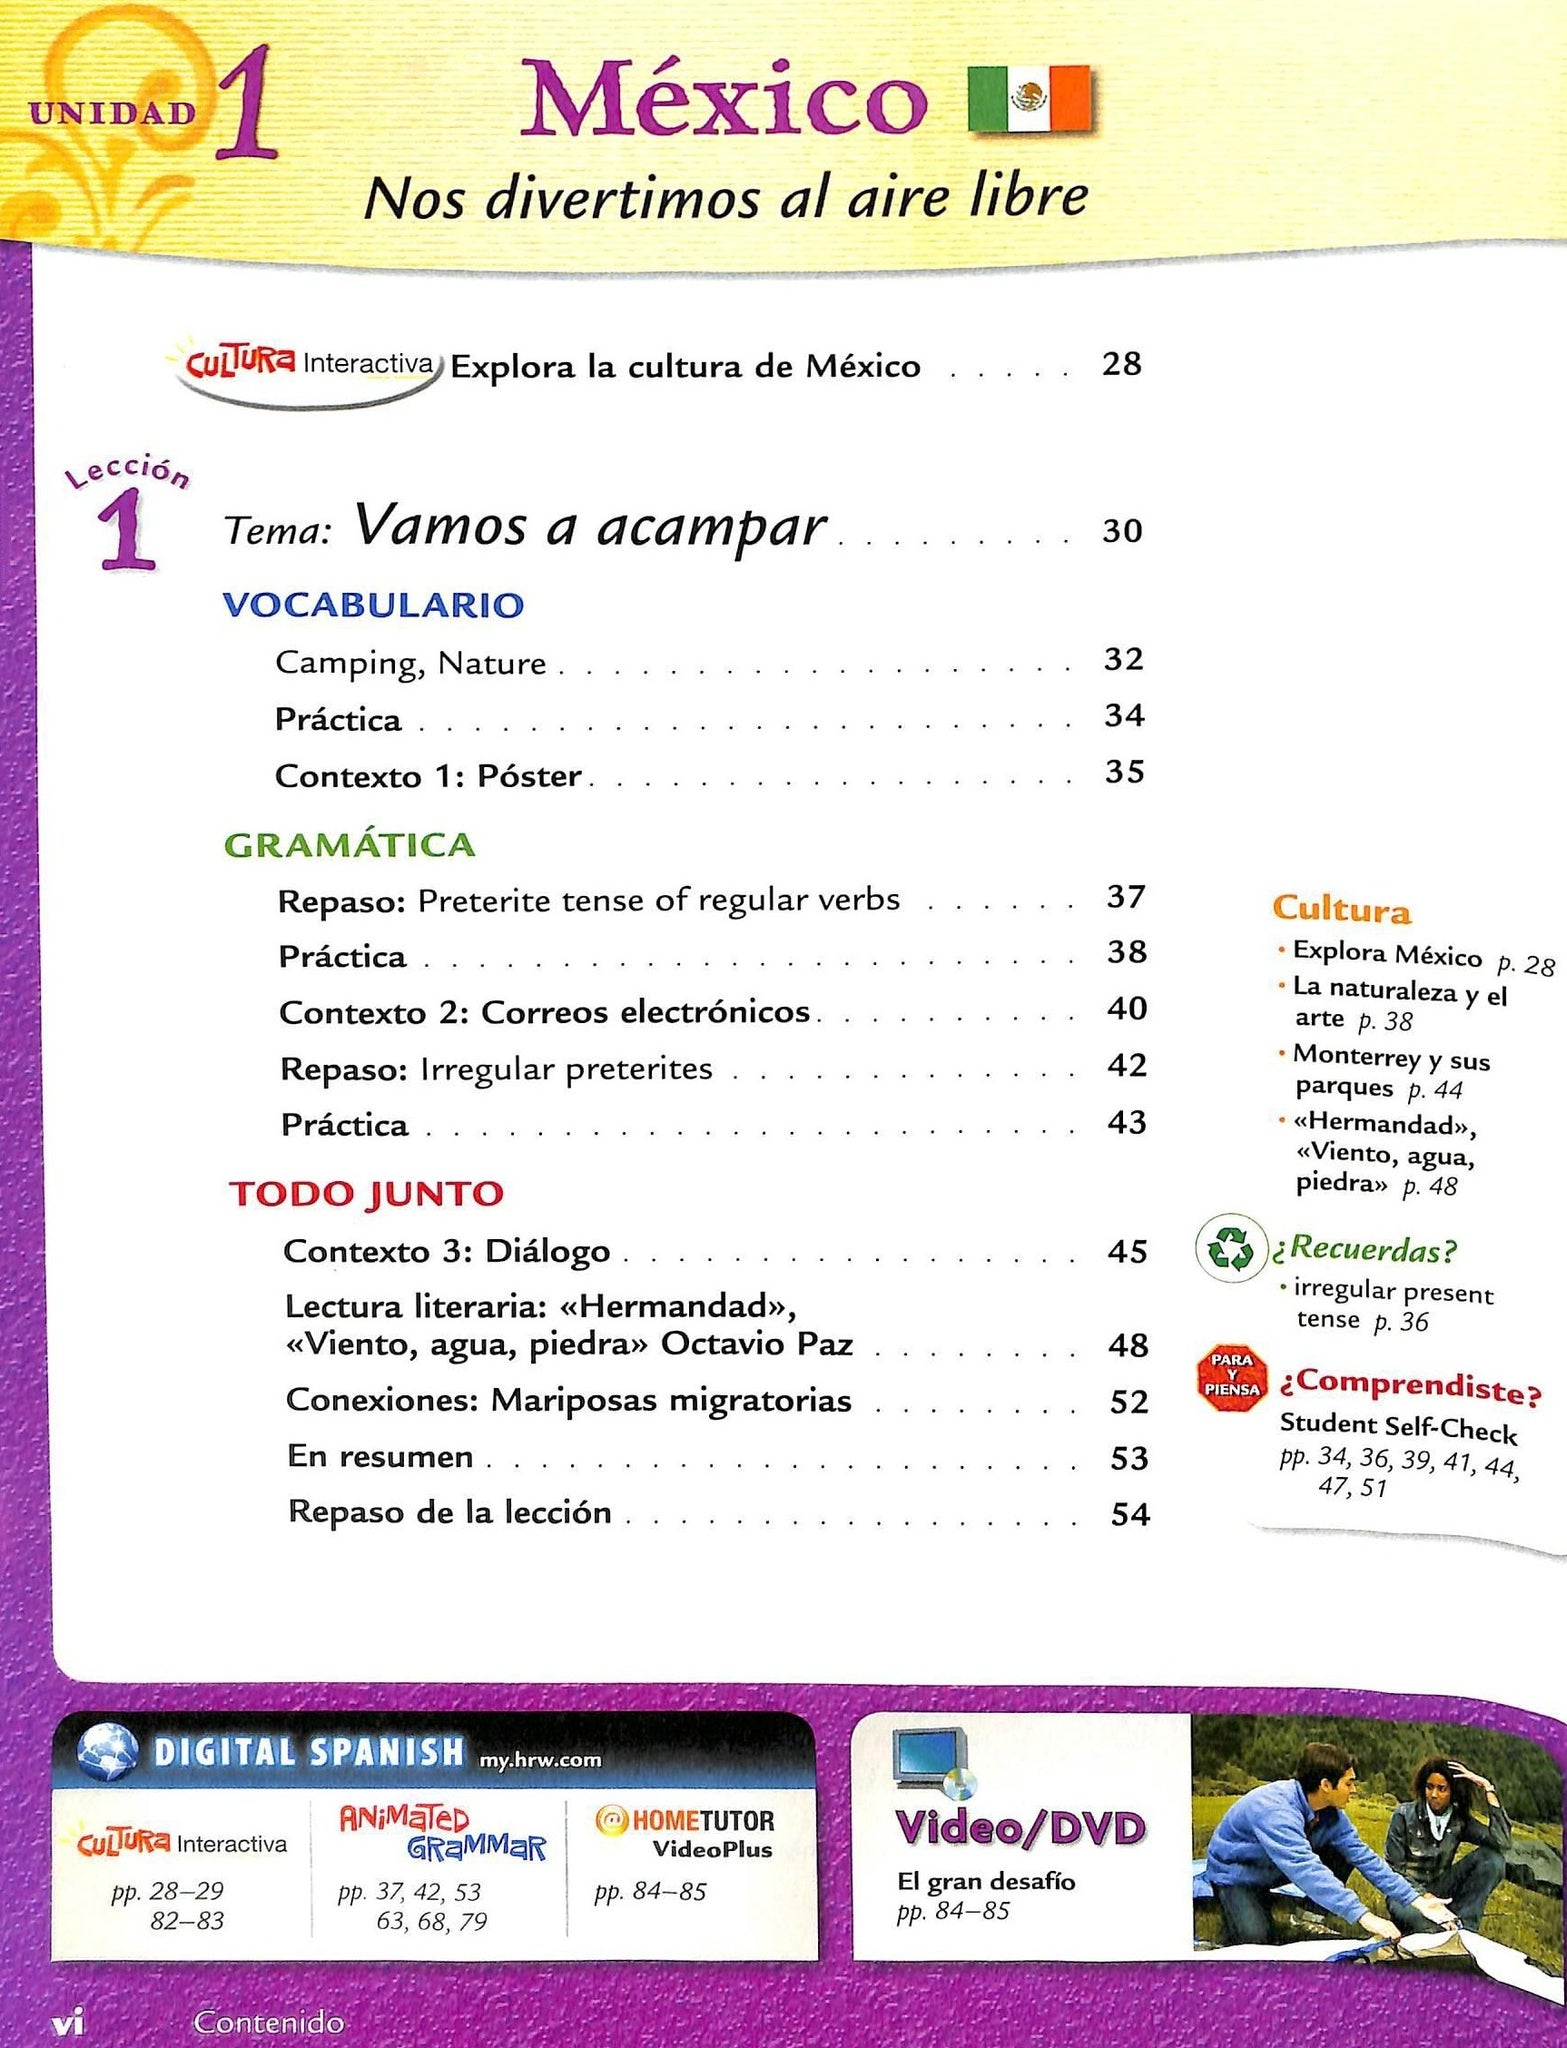 avancemos-spanish-3-textbook-kolbe-academy-bookstore